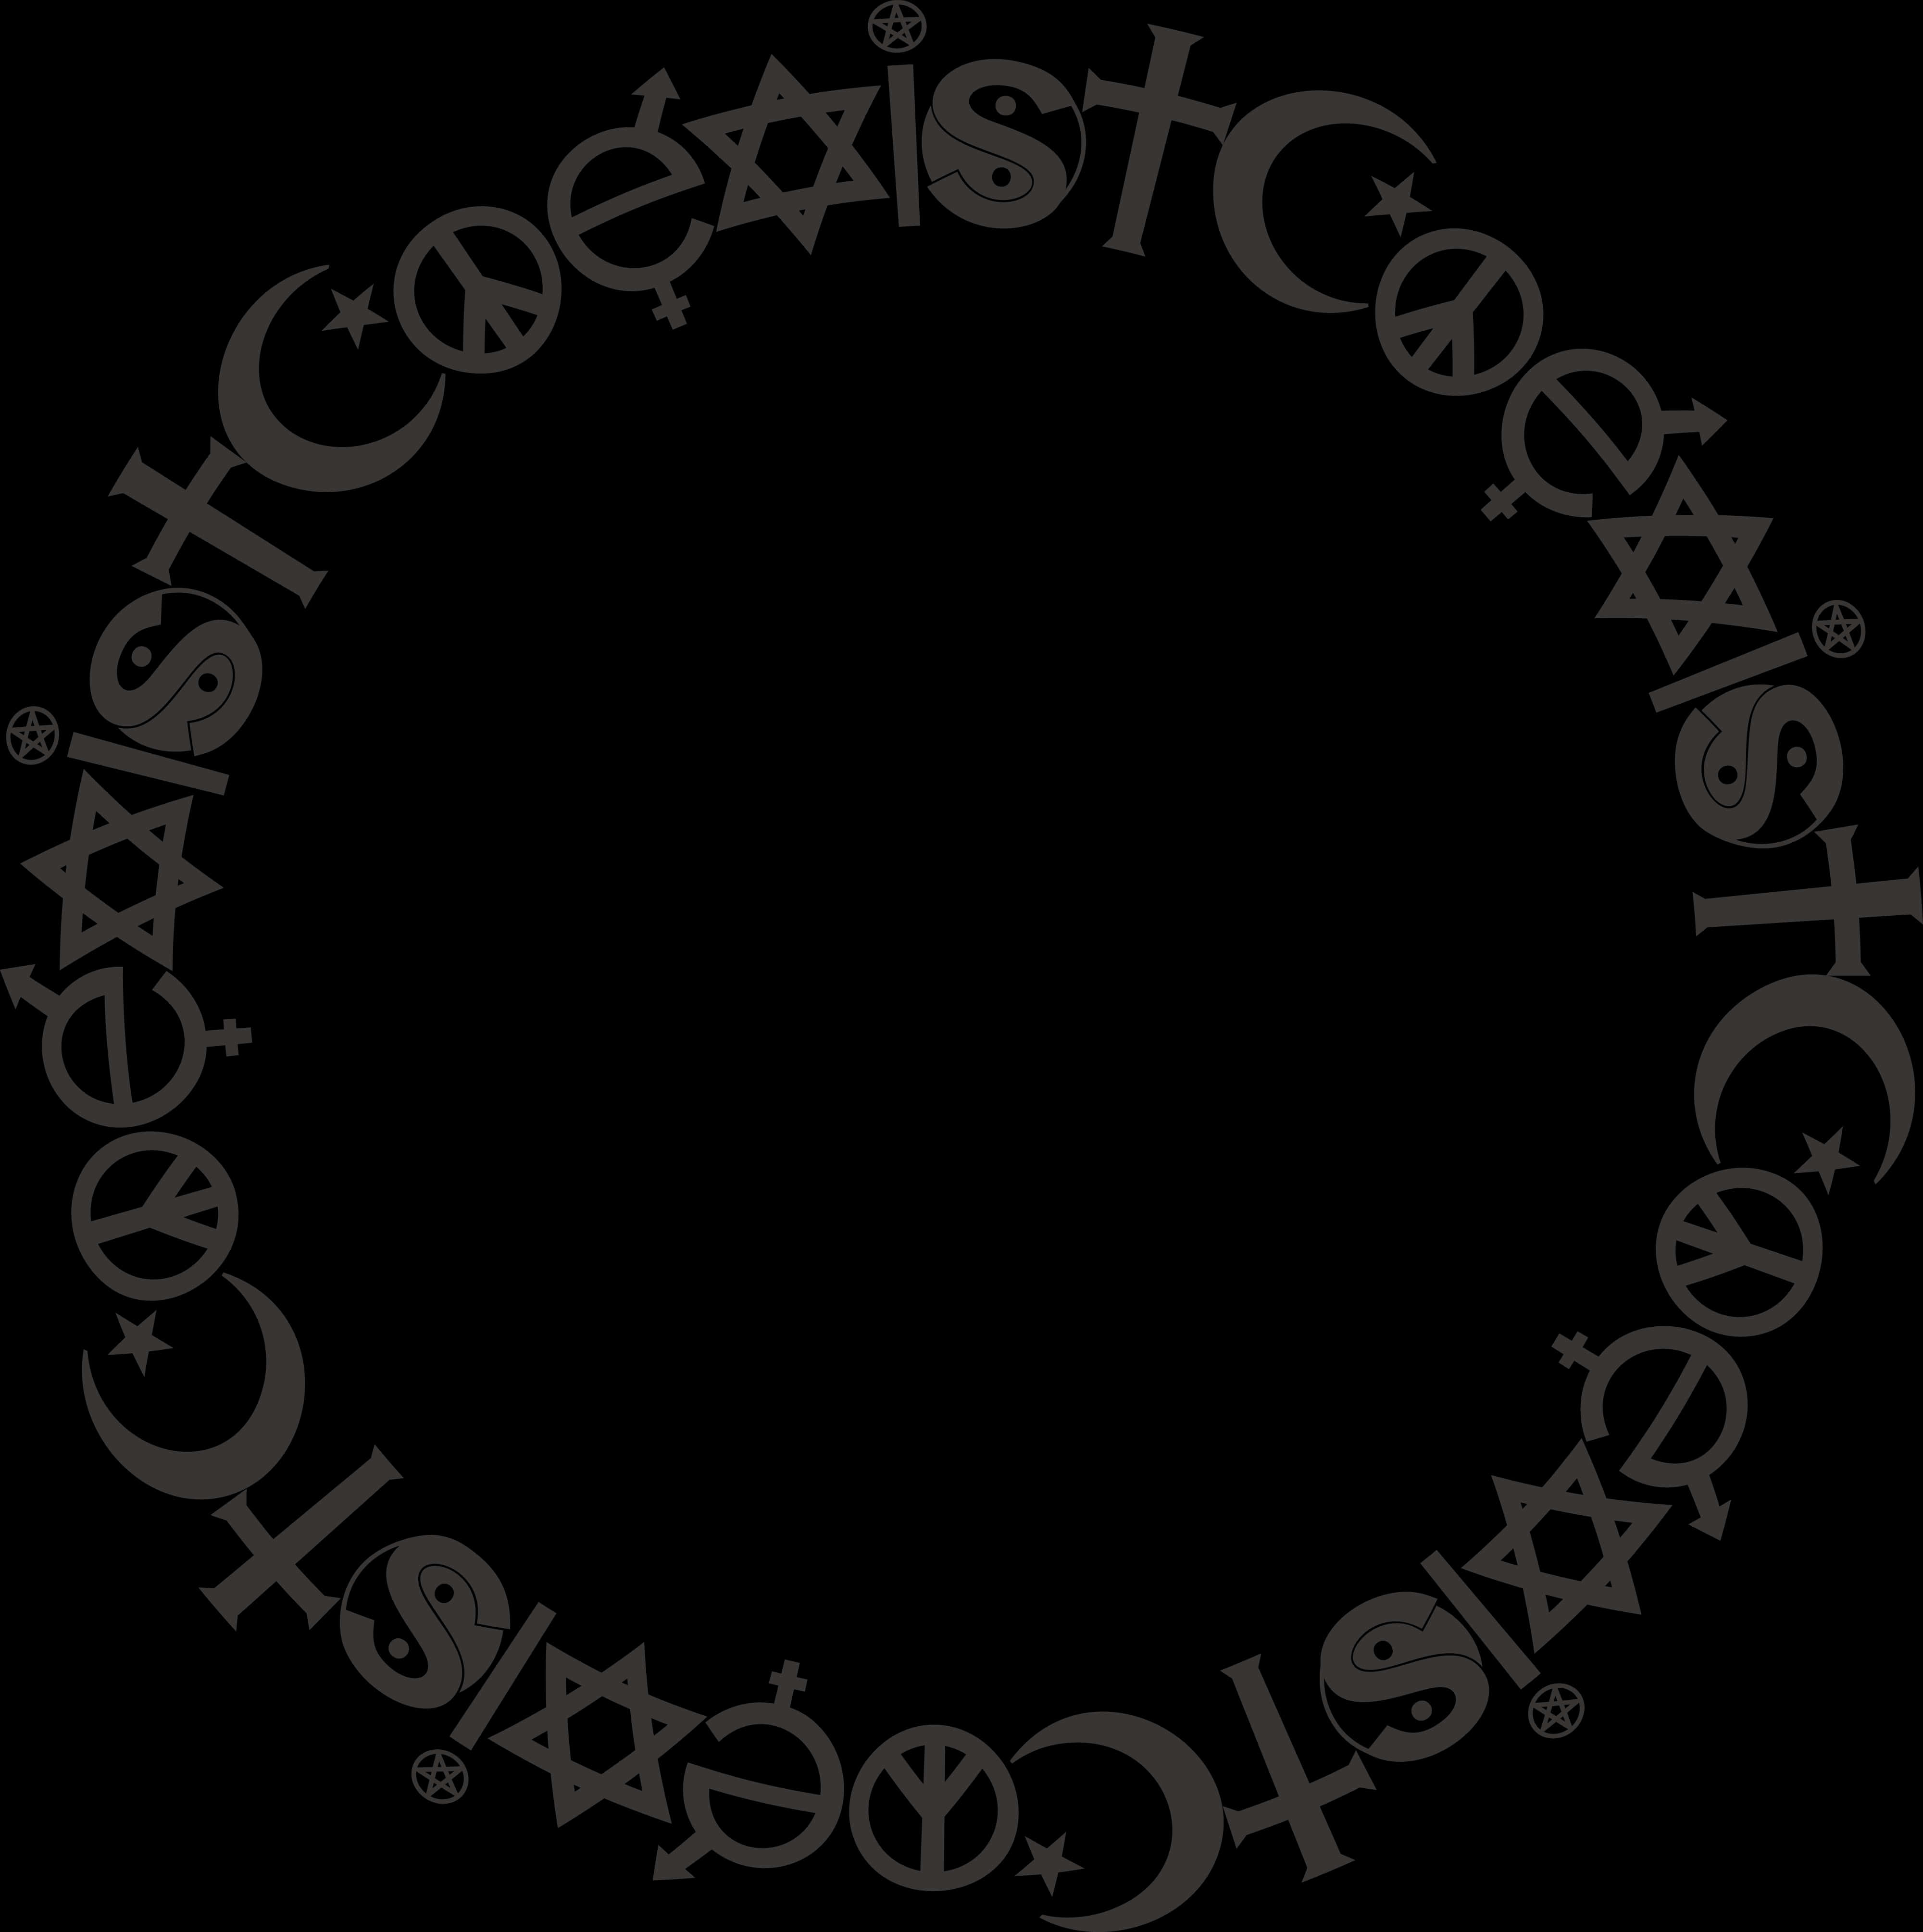 Coexist Symbols Round Frame PNG